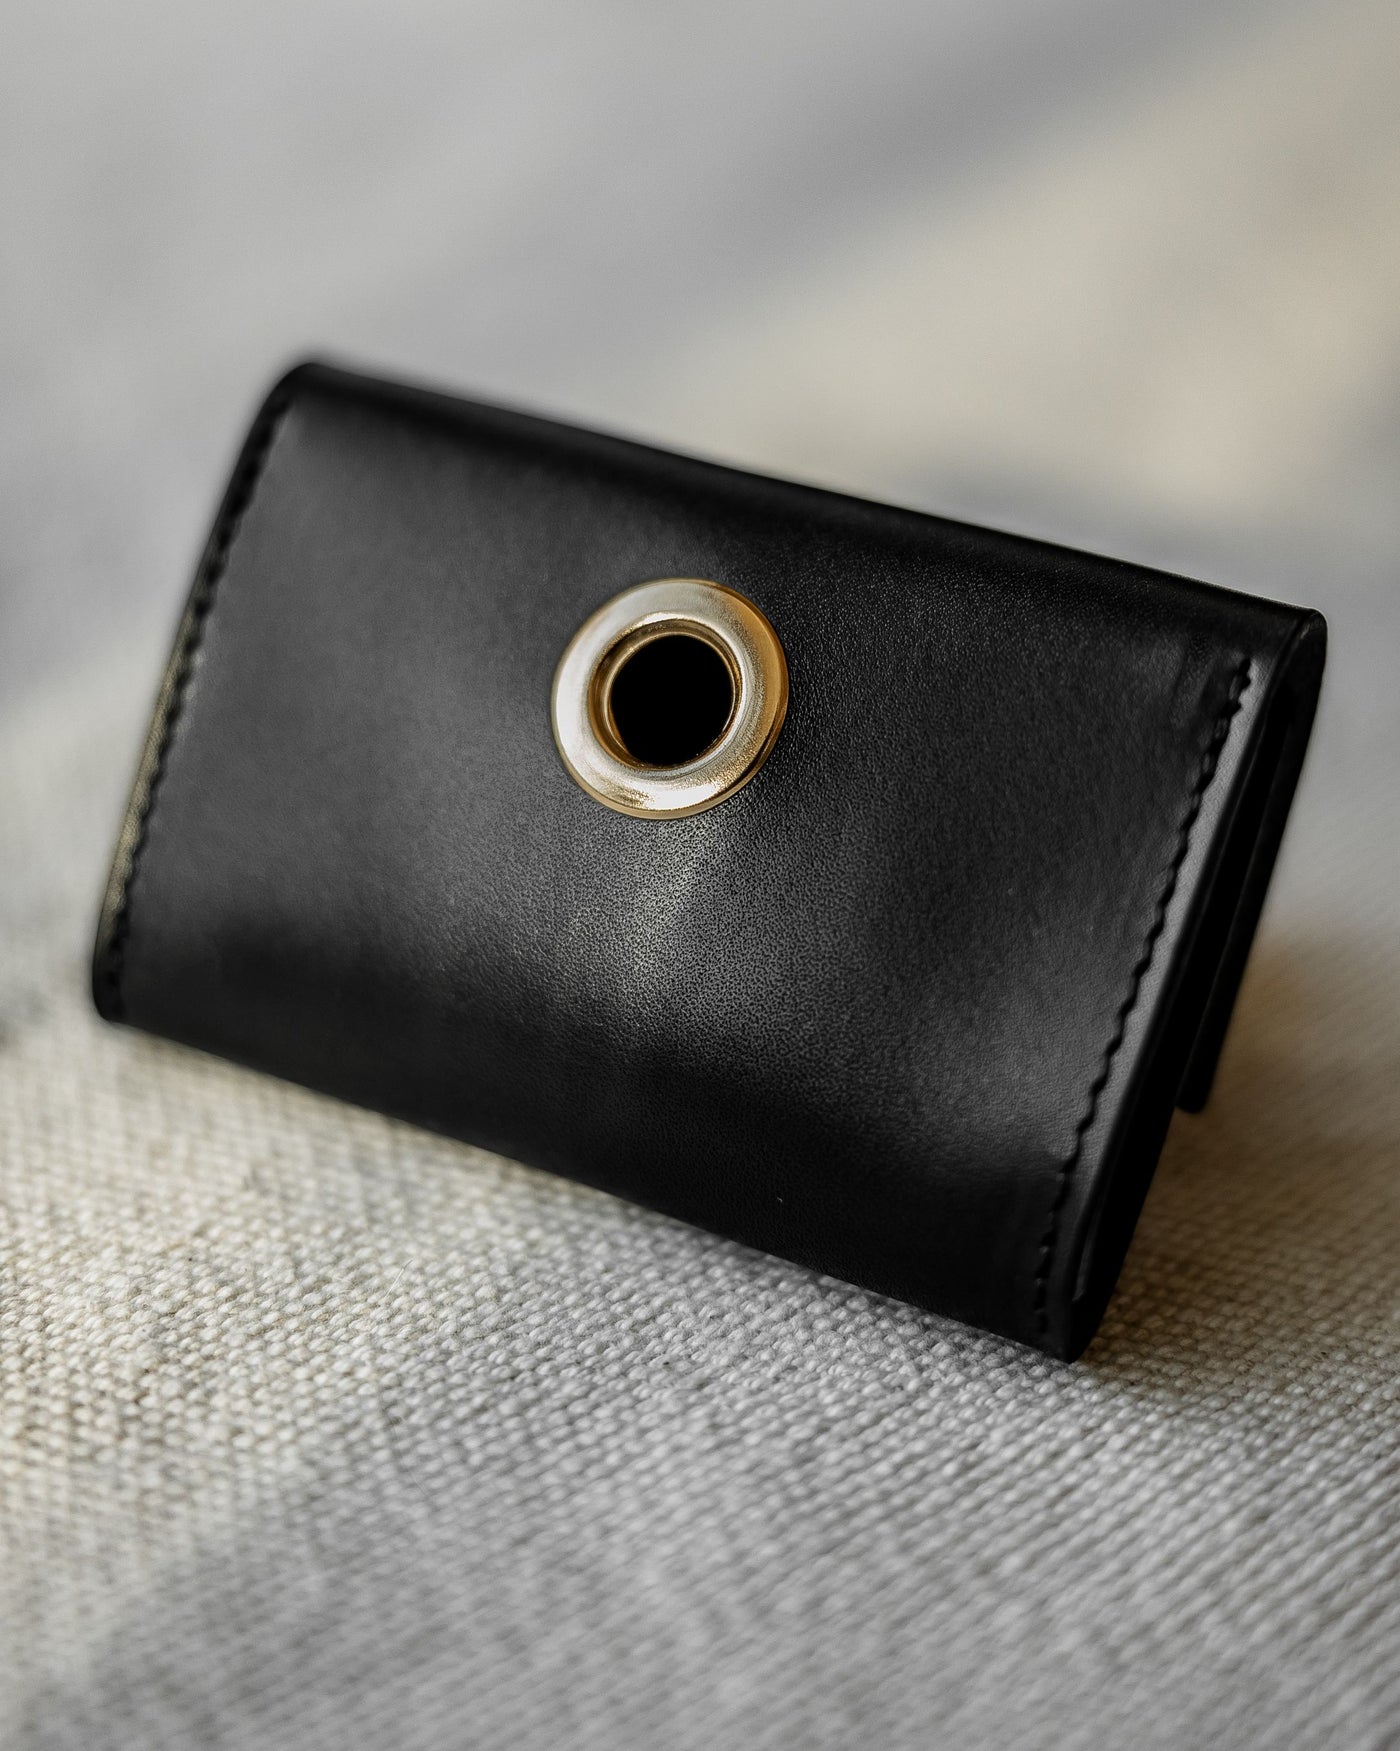 Leather Waste Bag Dispenser in Black Product Image Detail